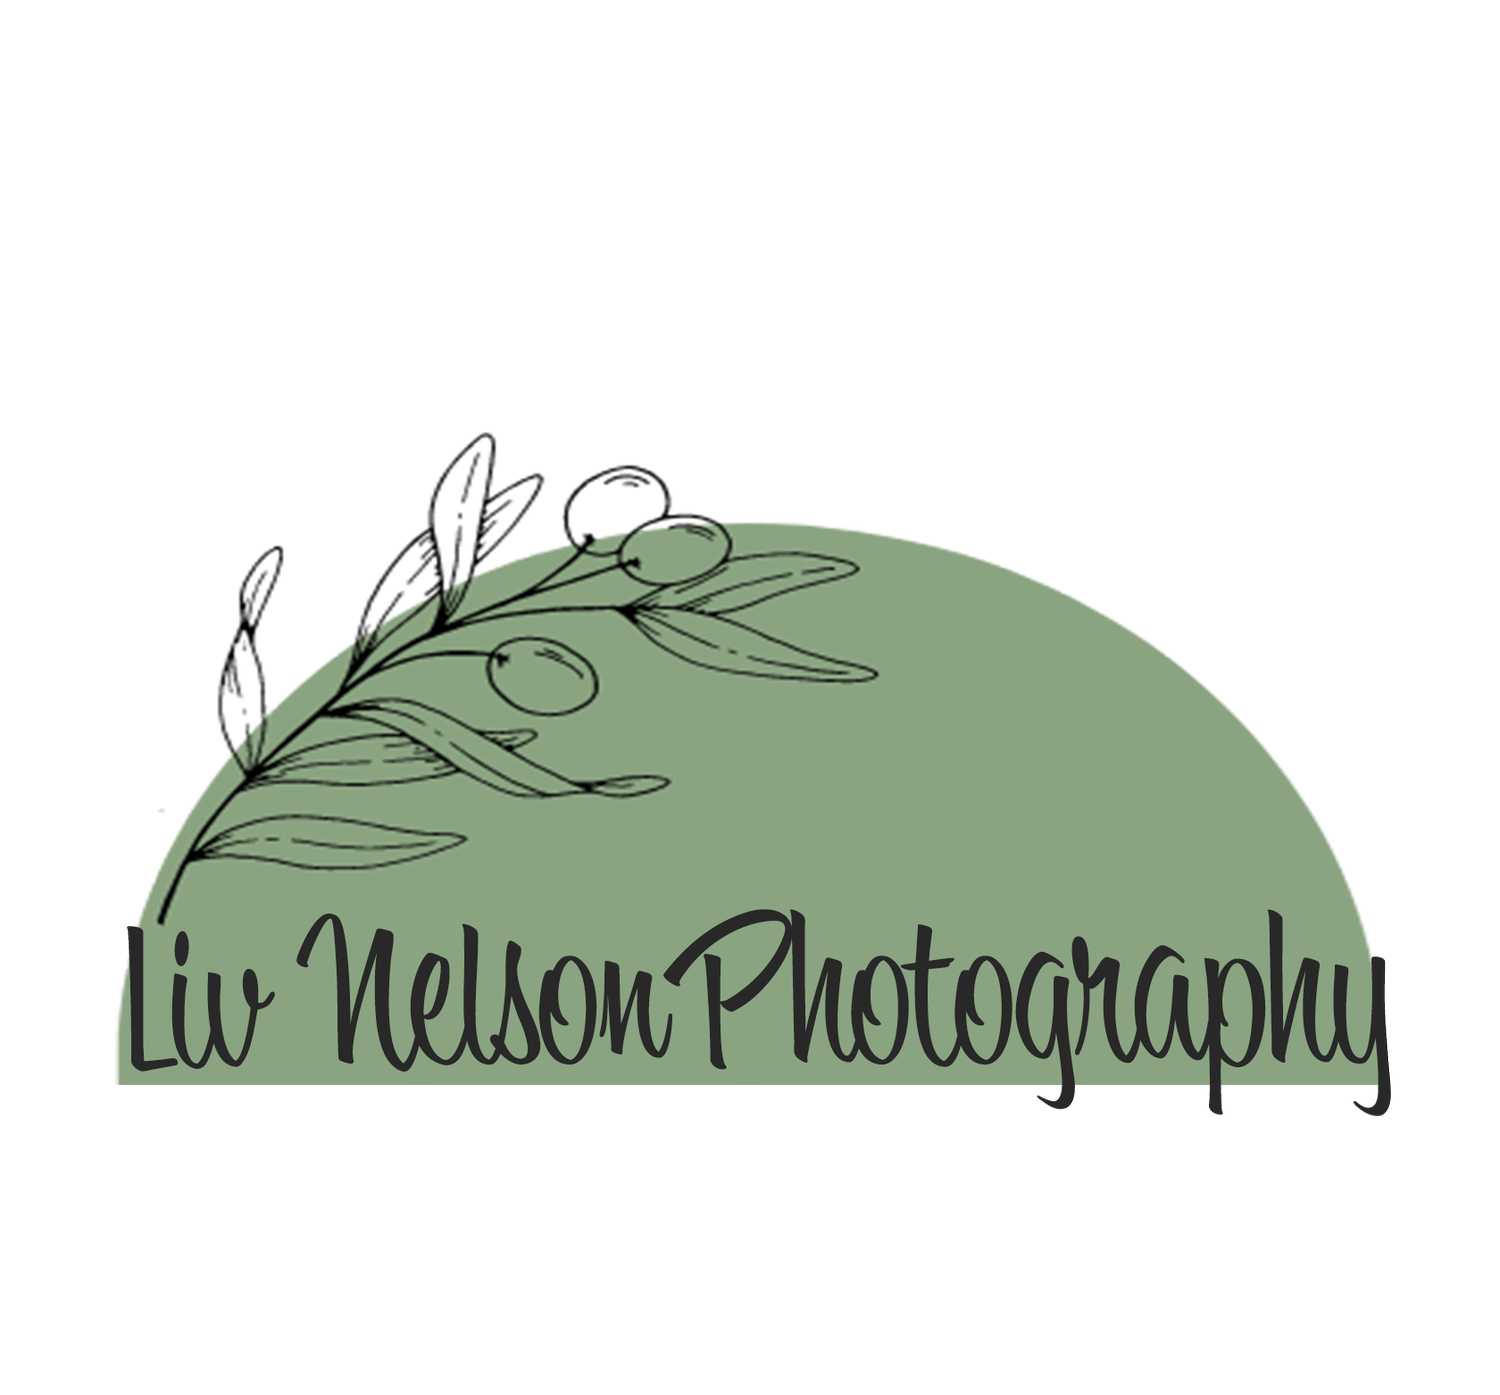 Liv Nelson Photography